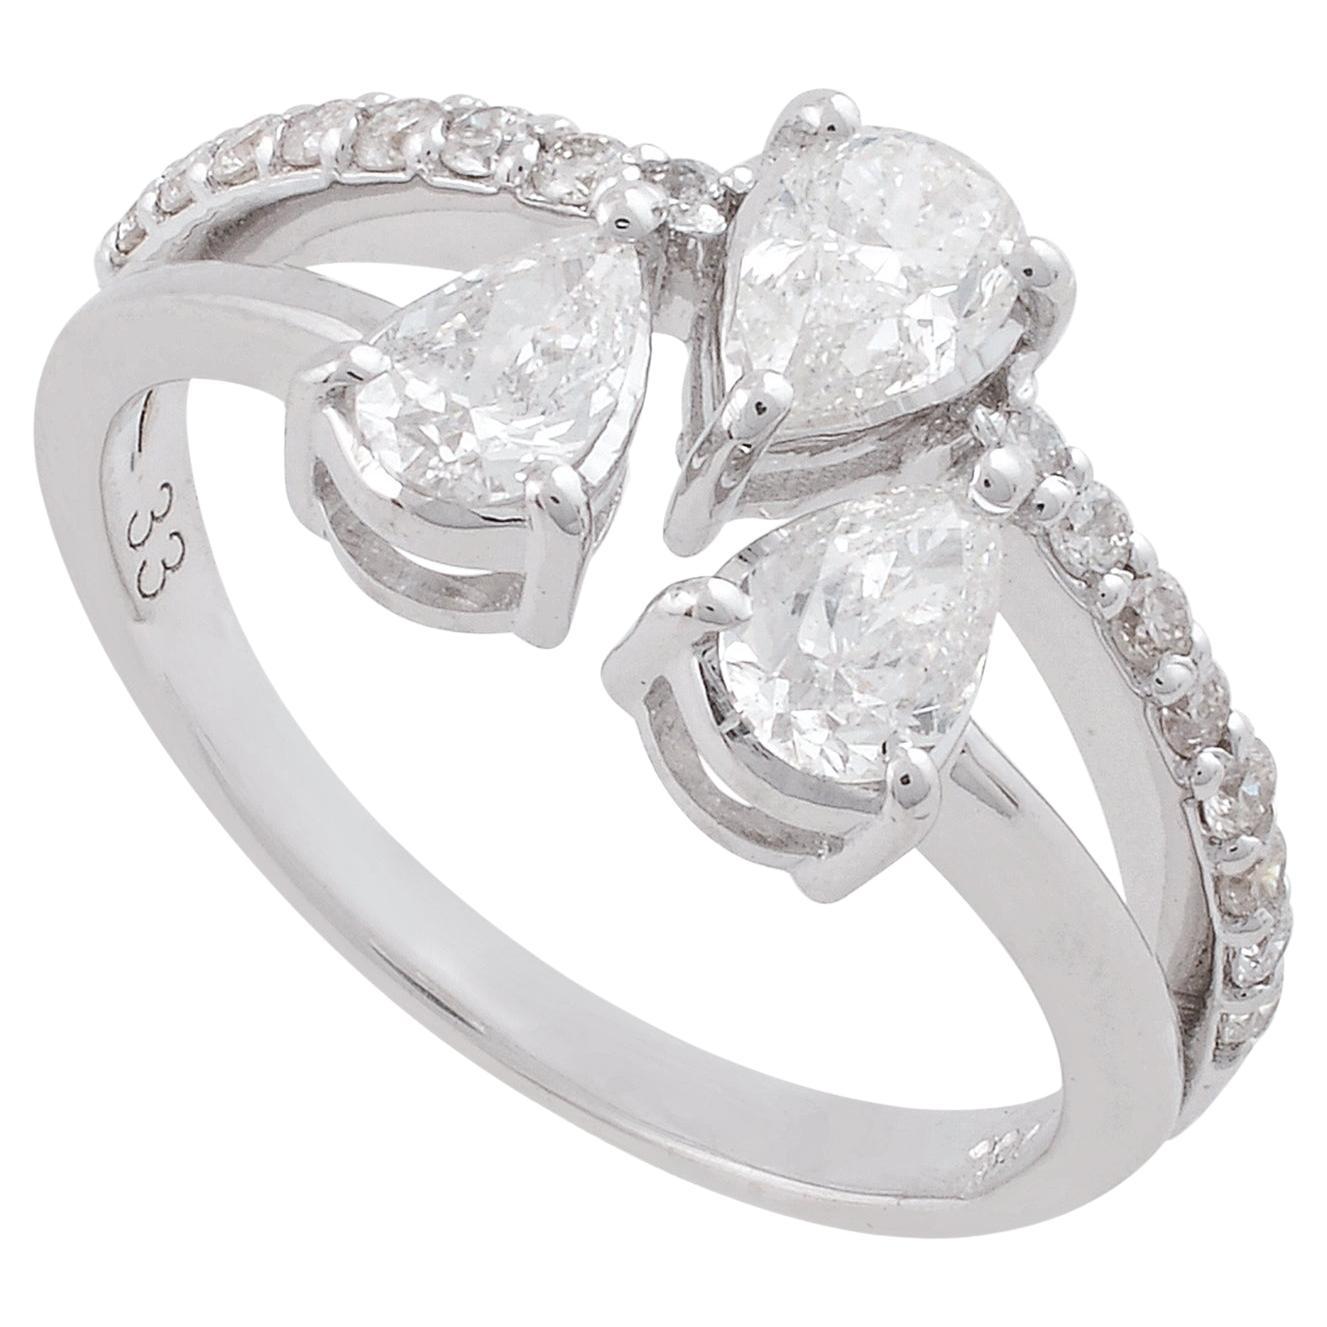 0.99 Carat SI Clarity HI Color Pear Diamond Ring 14k White Gold Handmade Jewelry